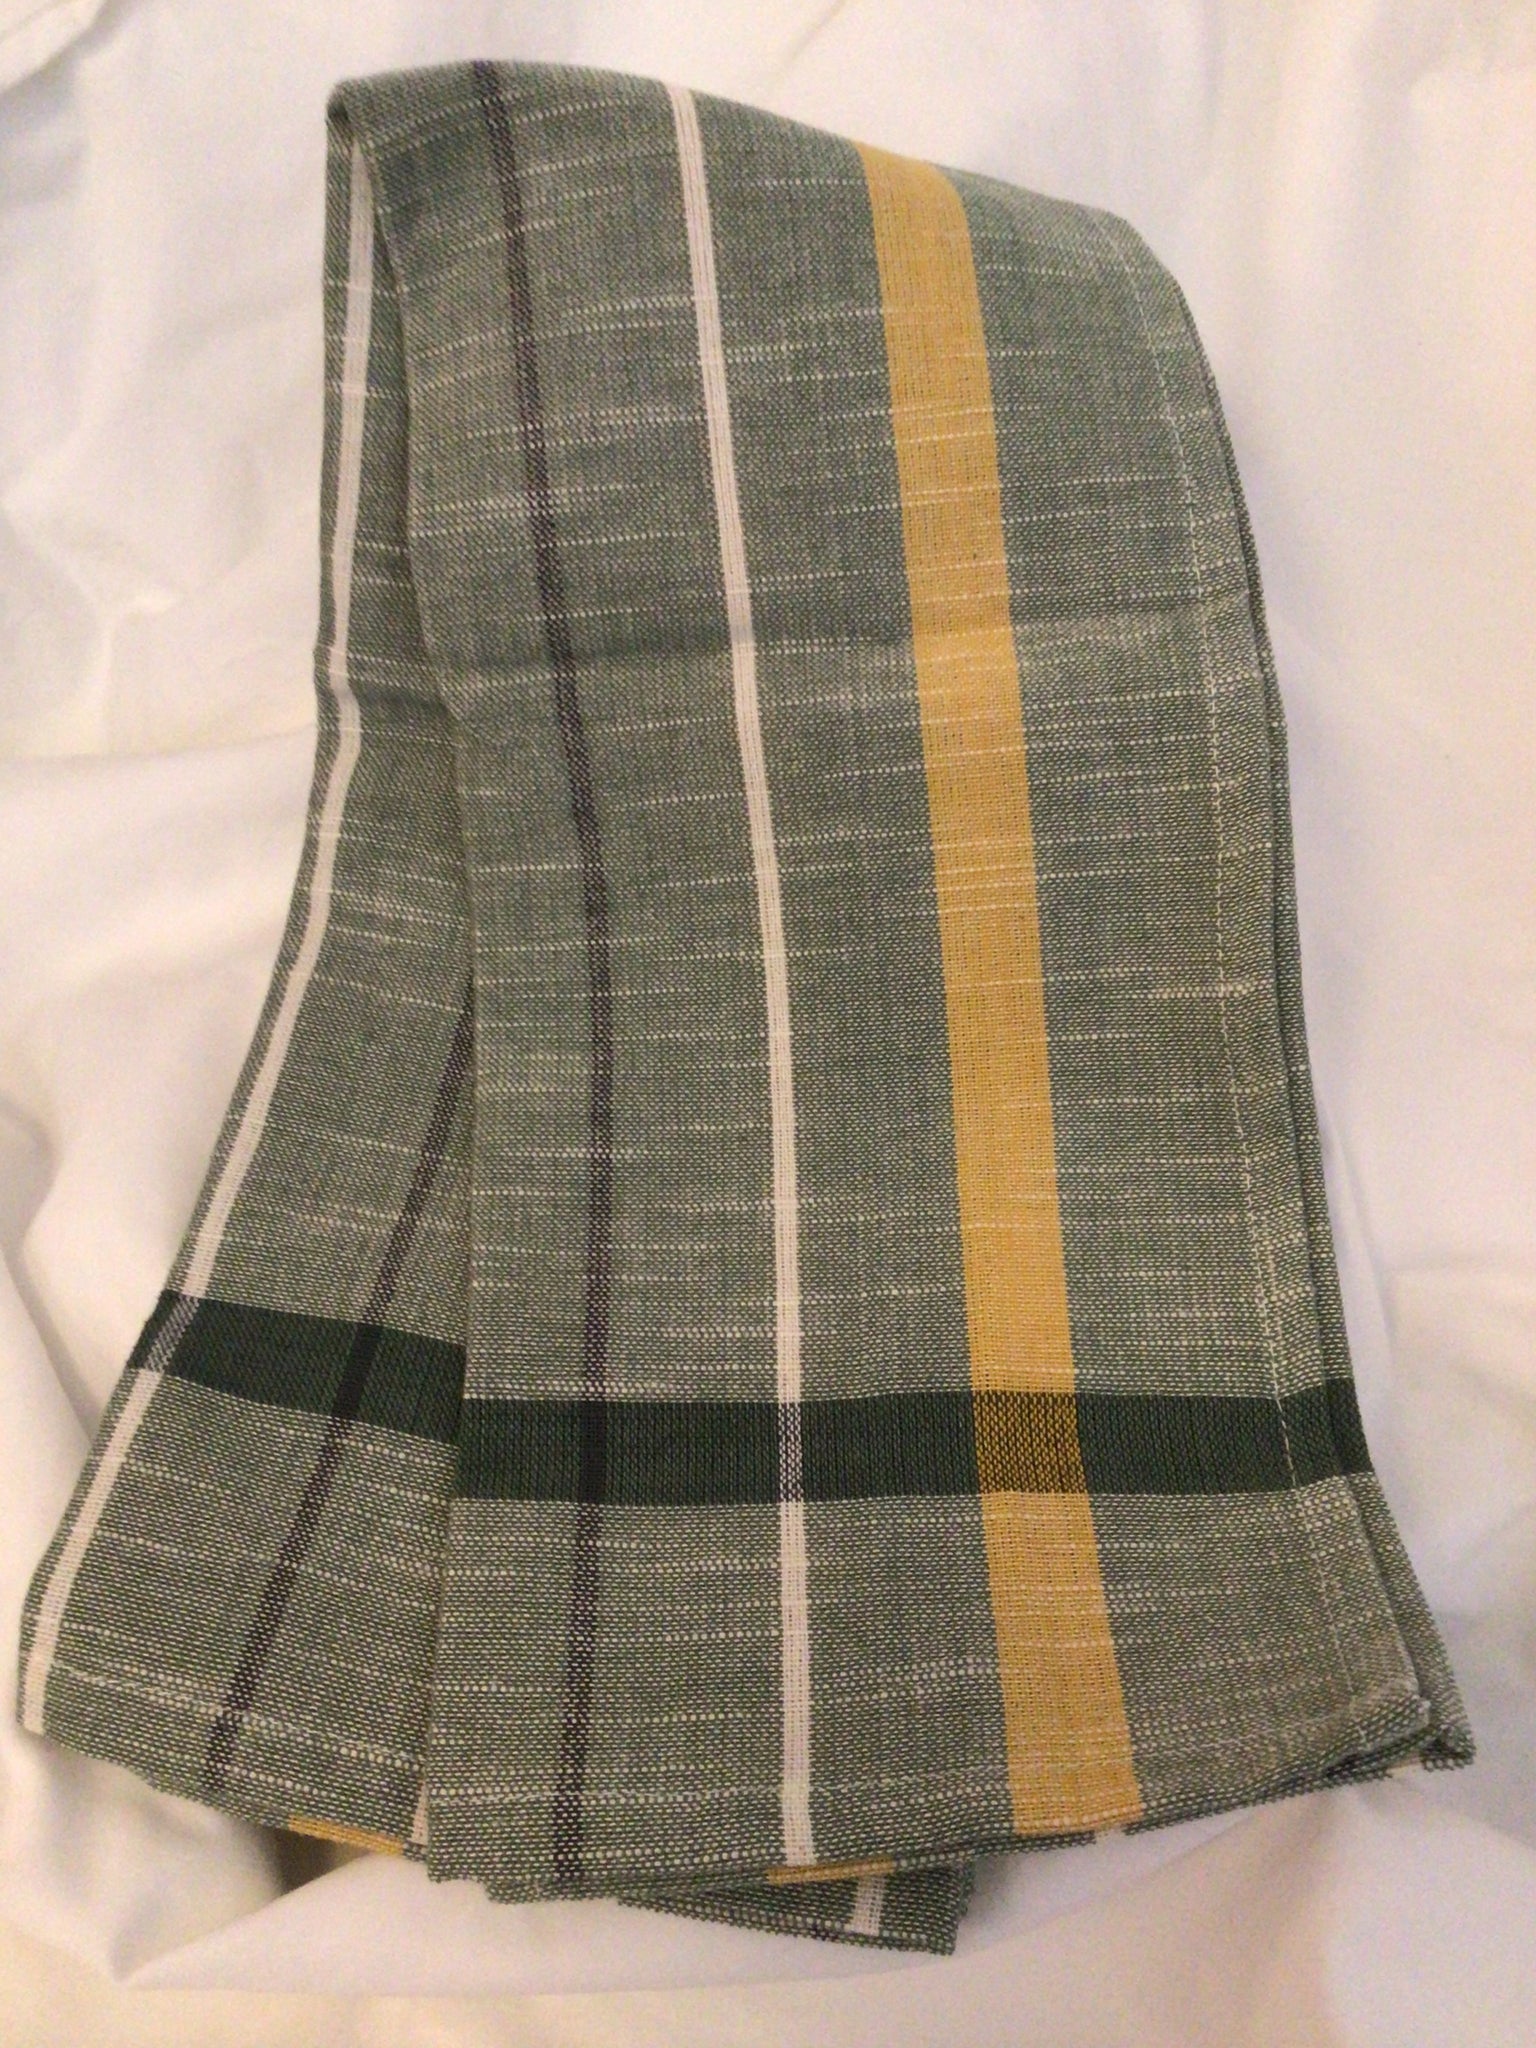 Woven Cotton Tea Towel with Stripes